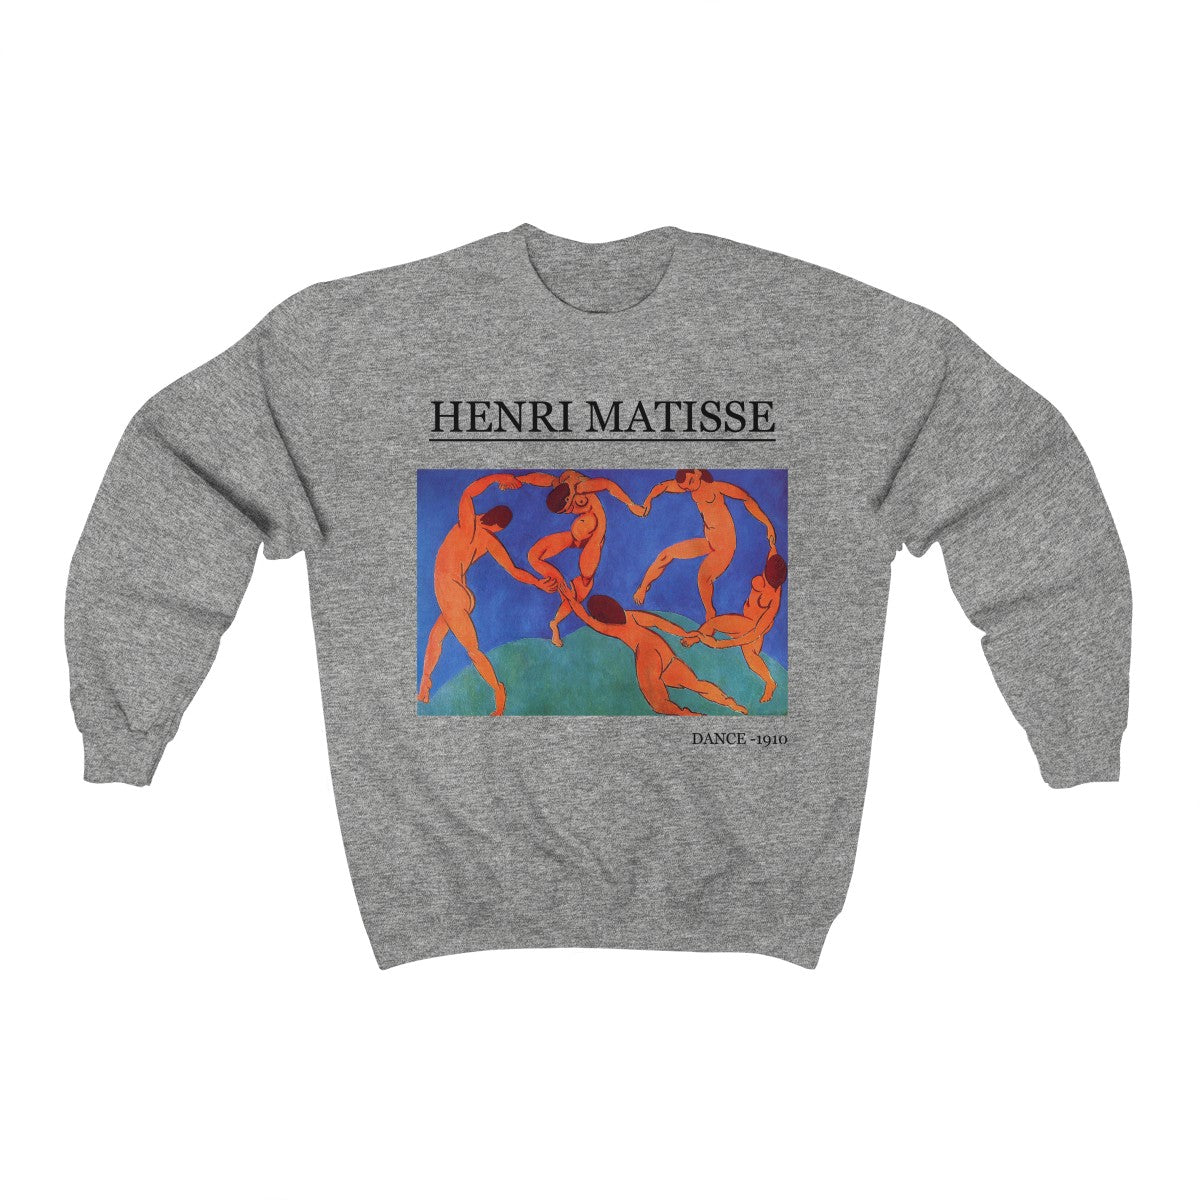 Henri Matisse Sweatshirt - The Dance